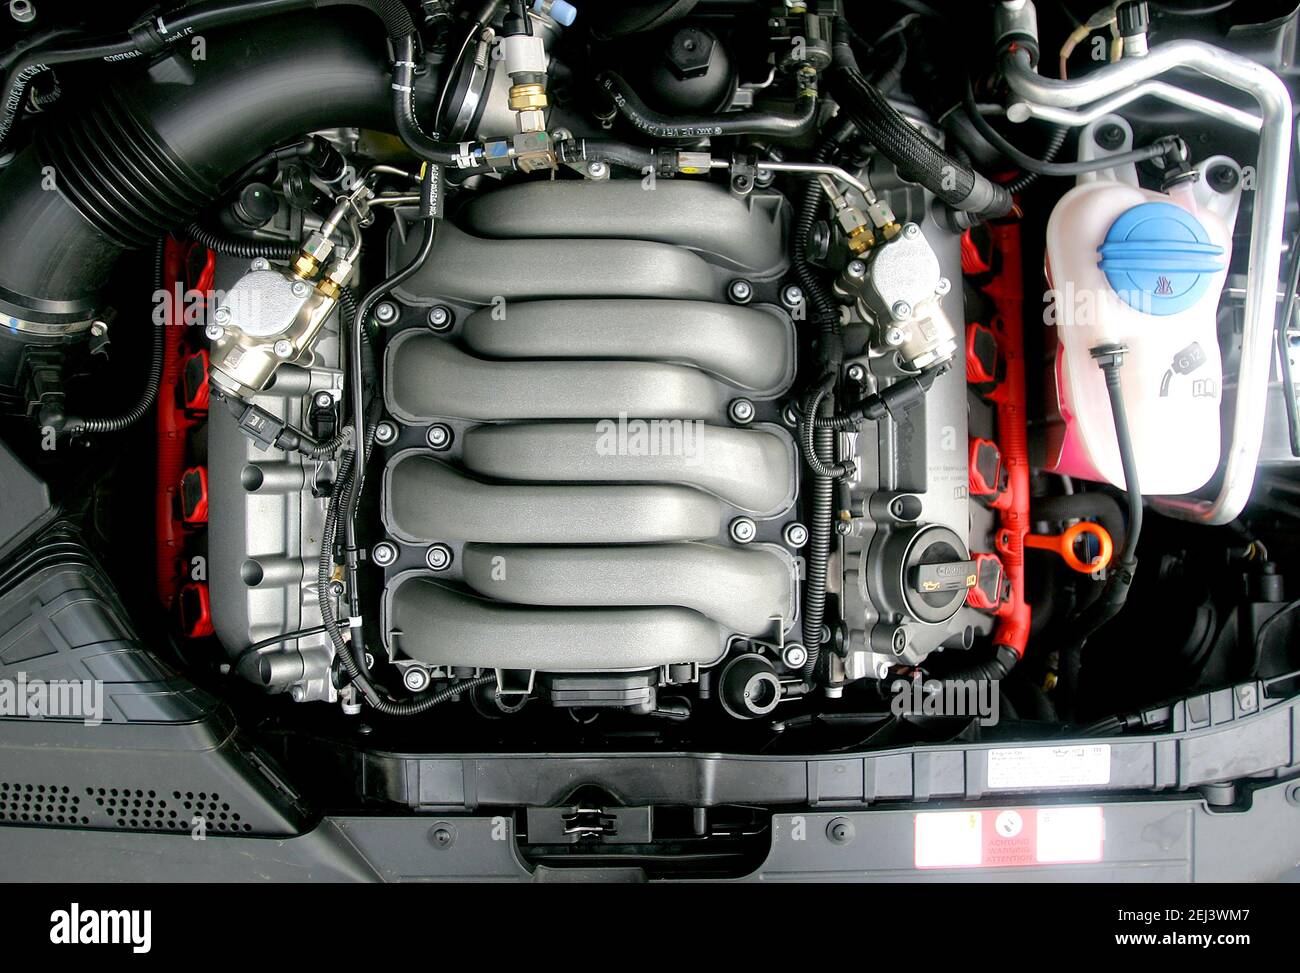 Audi S5 engine Stock Photo - Alamy